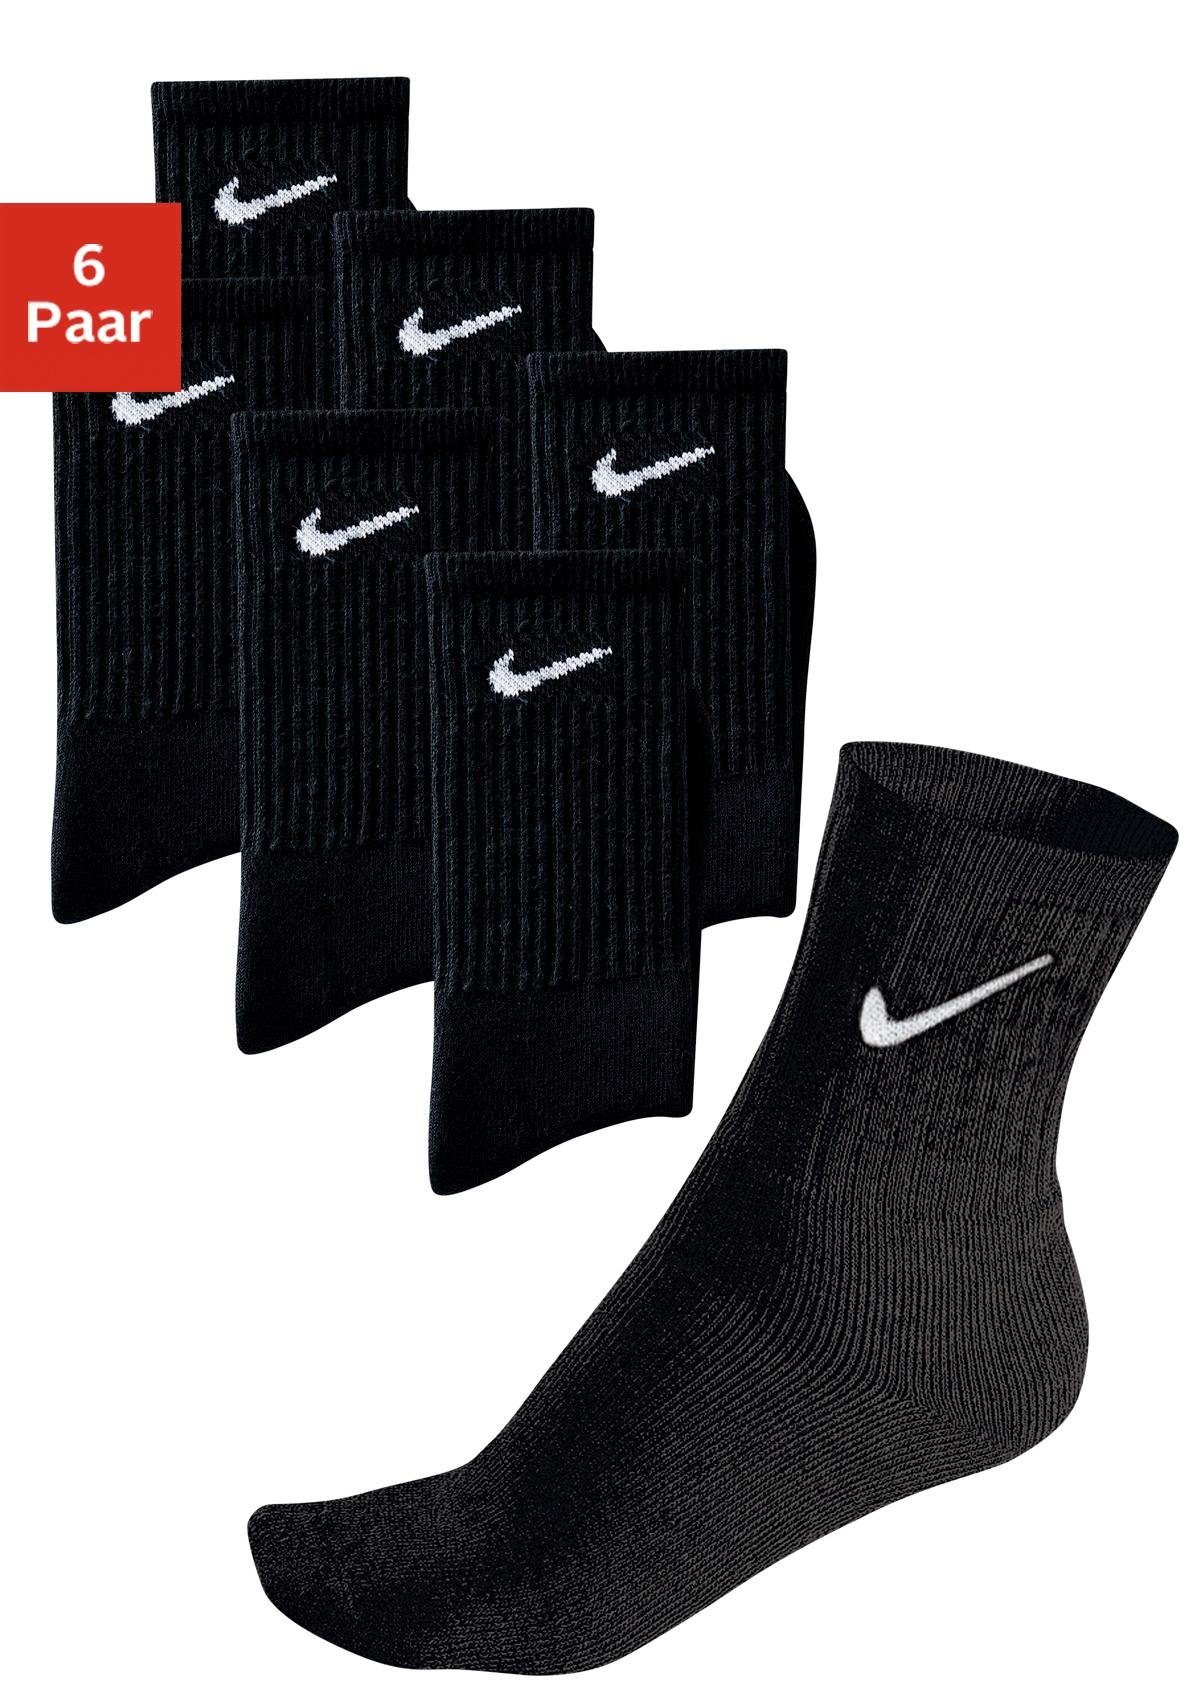 Genre afwijzing residentie Nike Sportsokken met voetfrotté (6 paar) kopen? Bestel hier | LASCANA